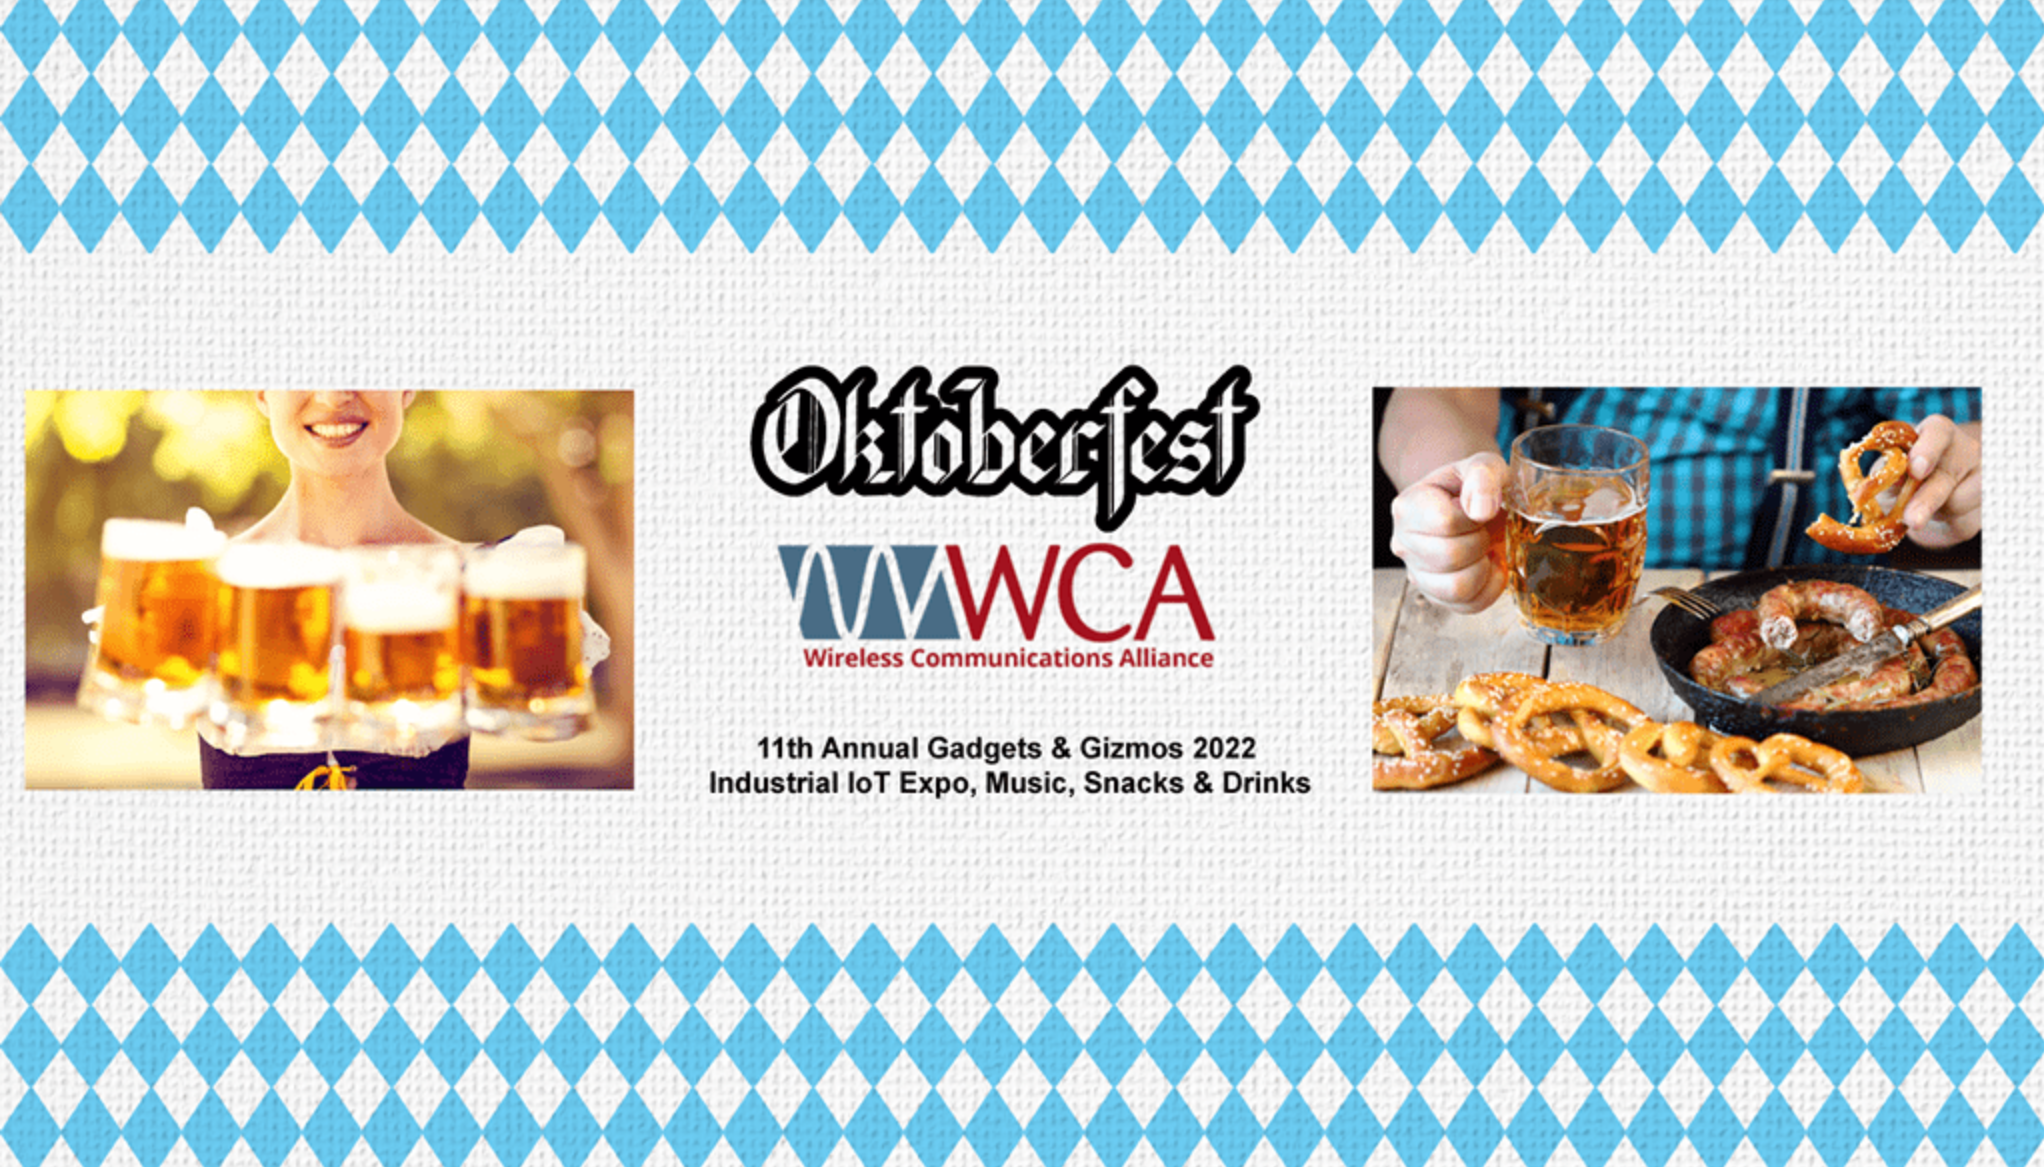 WCA Oktoberfest 2022